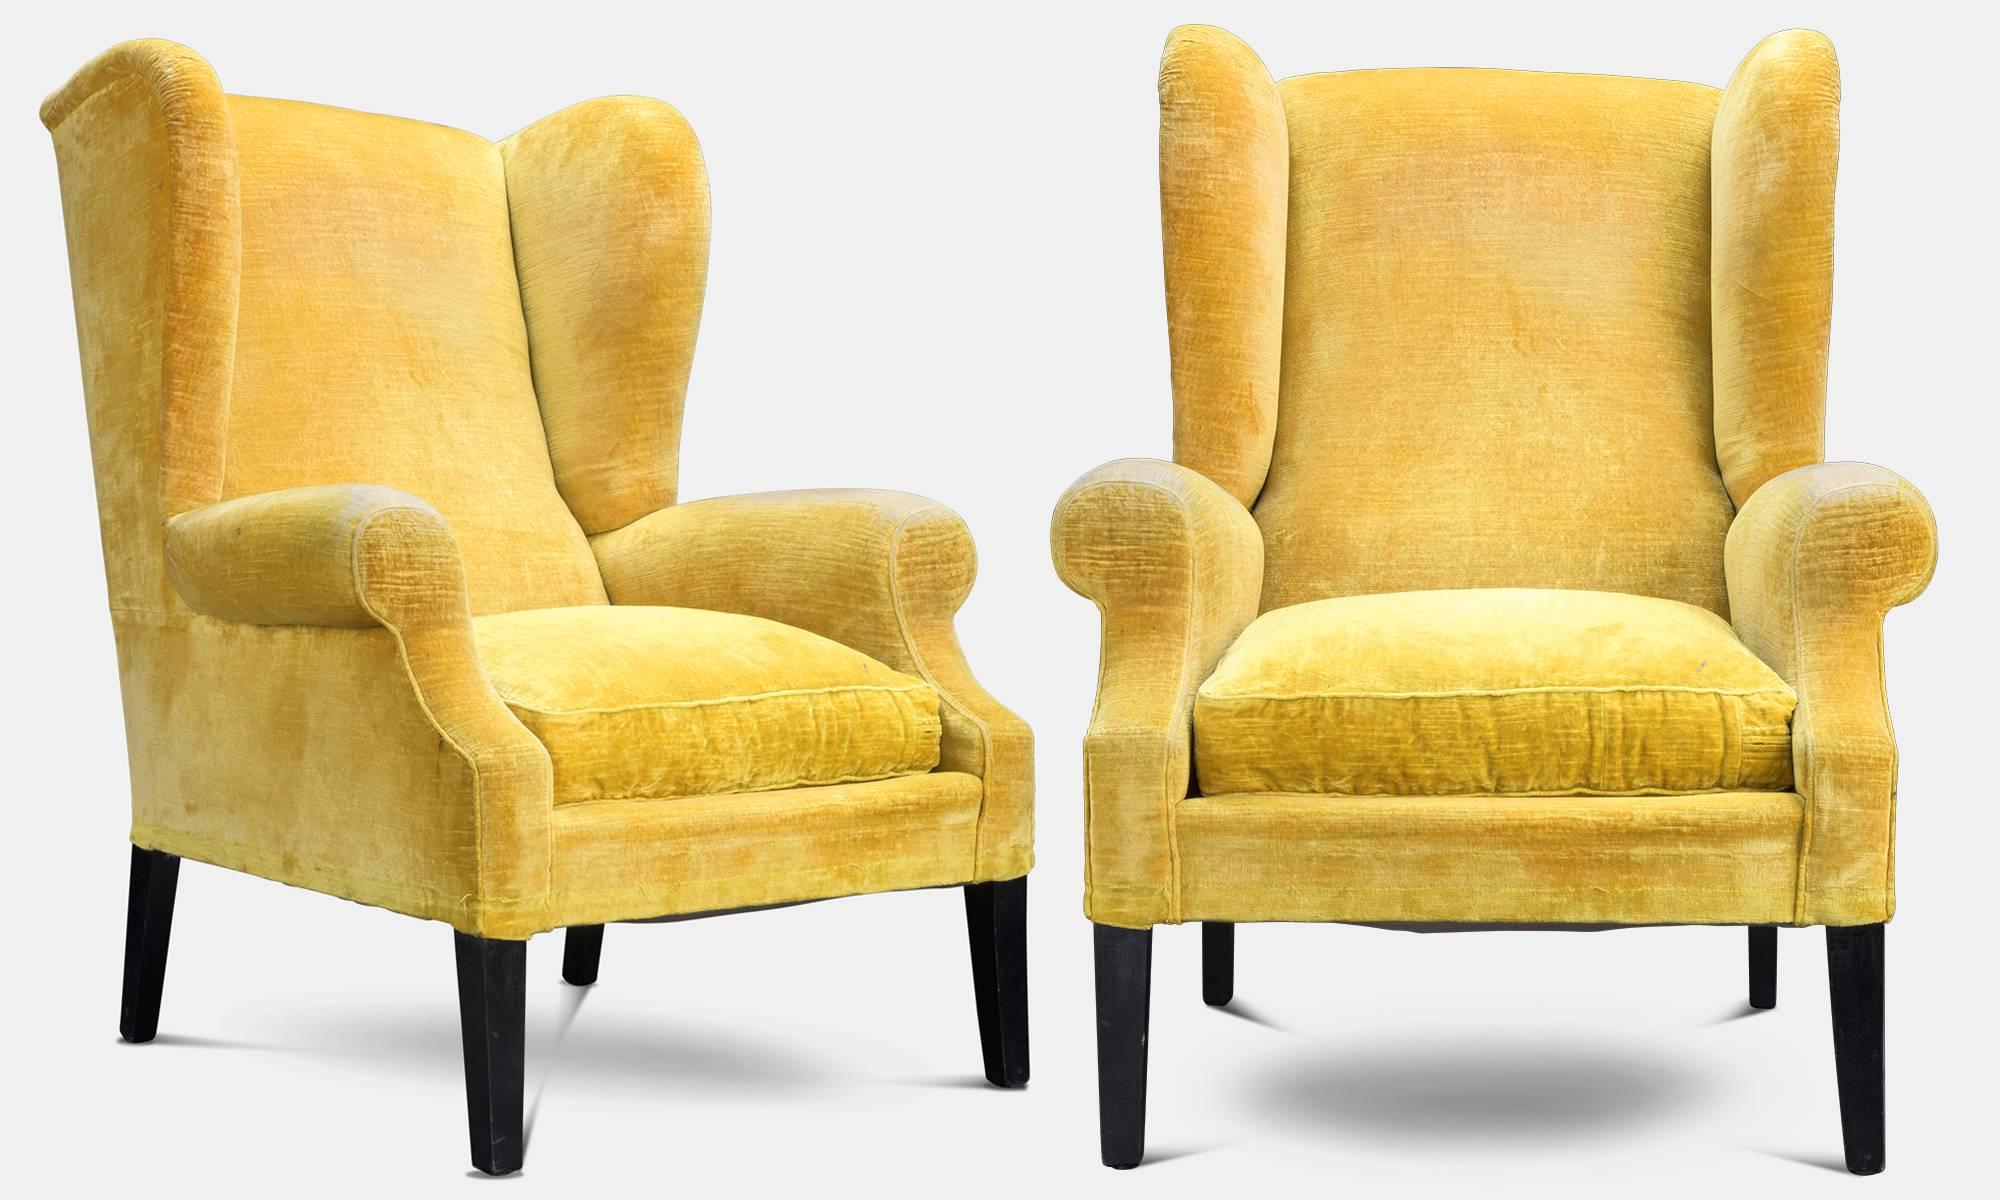 Pair of yellow velvet wingback armchairs, circa 1950.

Beautifully worn, original vibrant yellow upholstery with ebonized wooden legs.

   